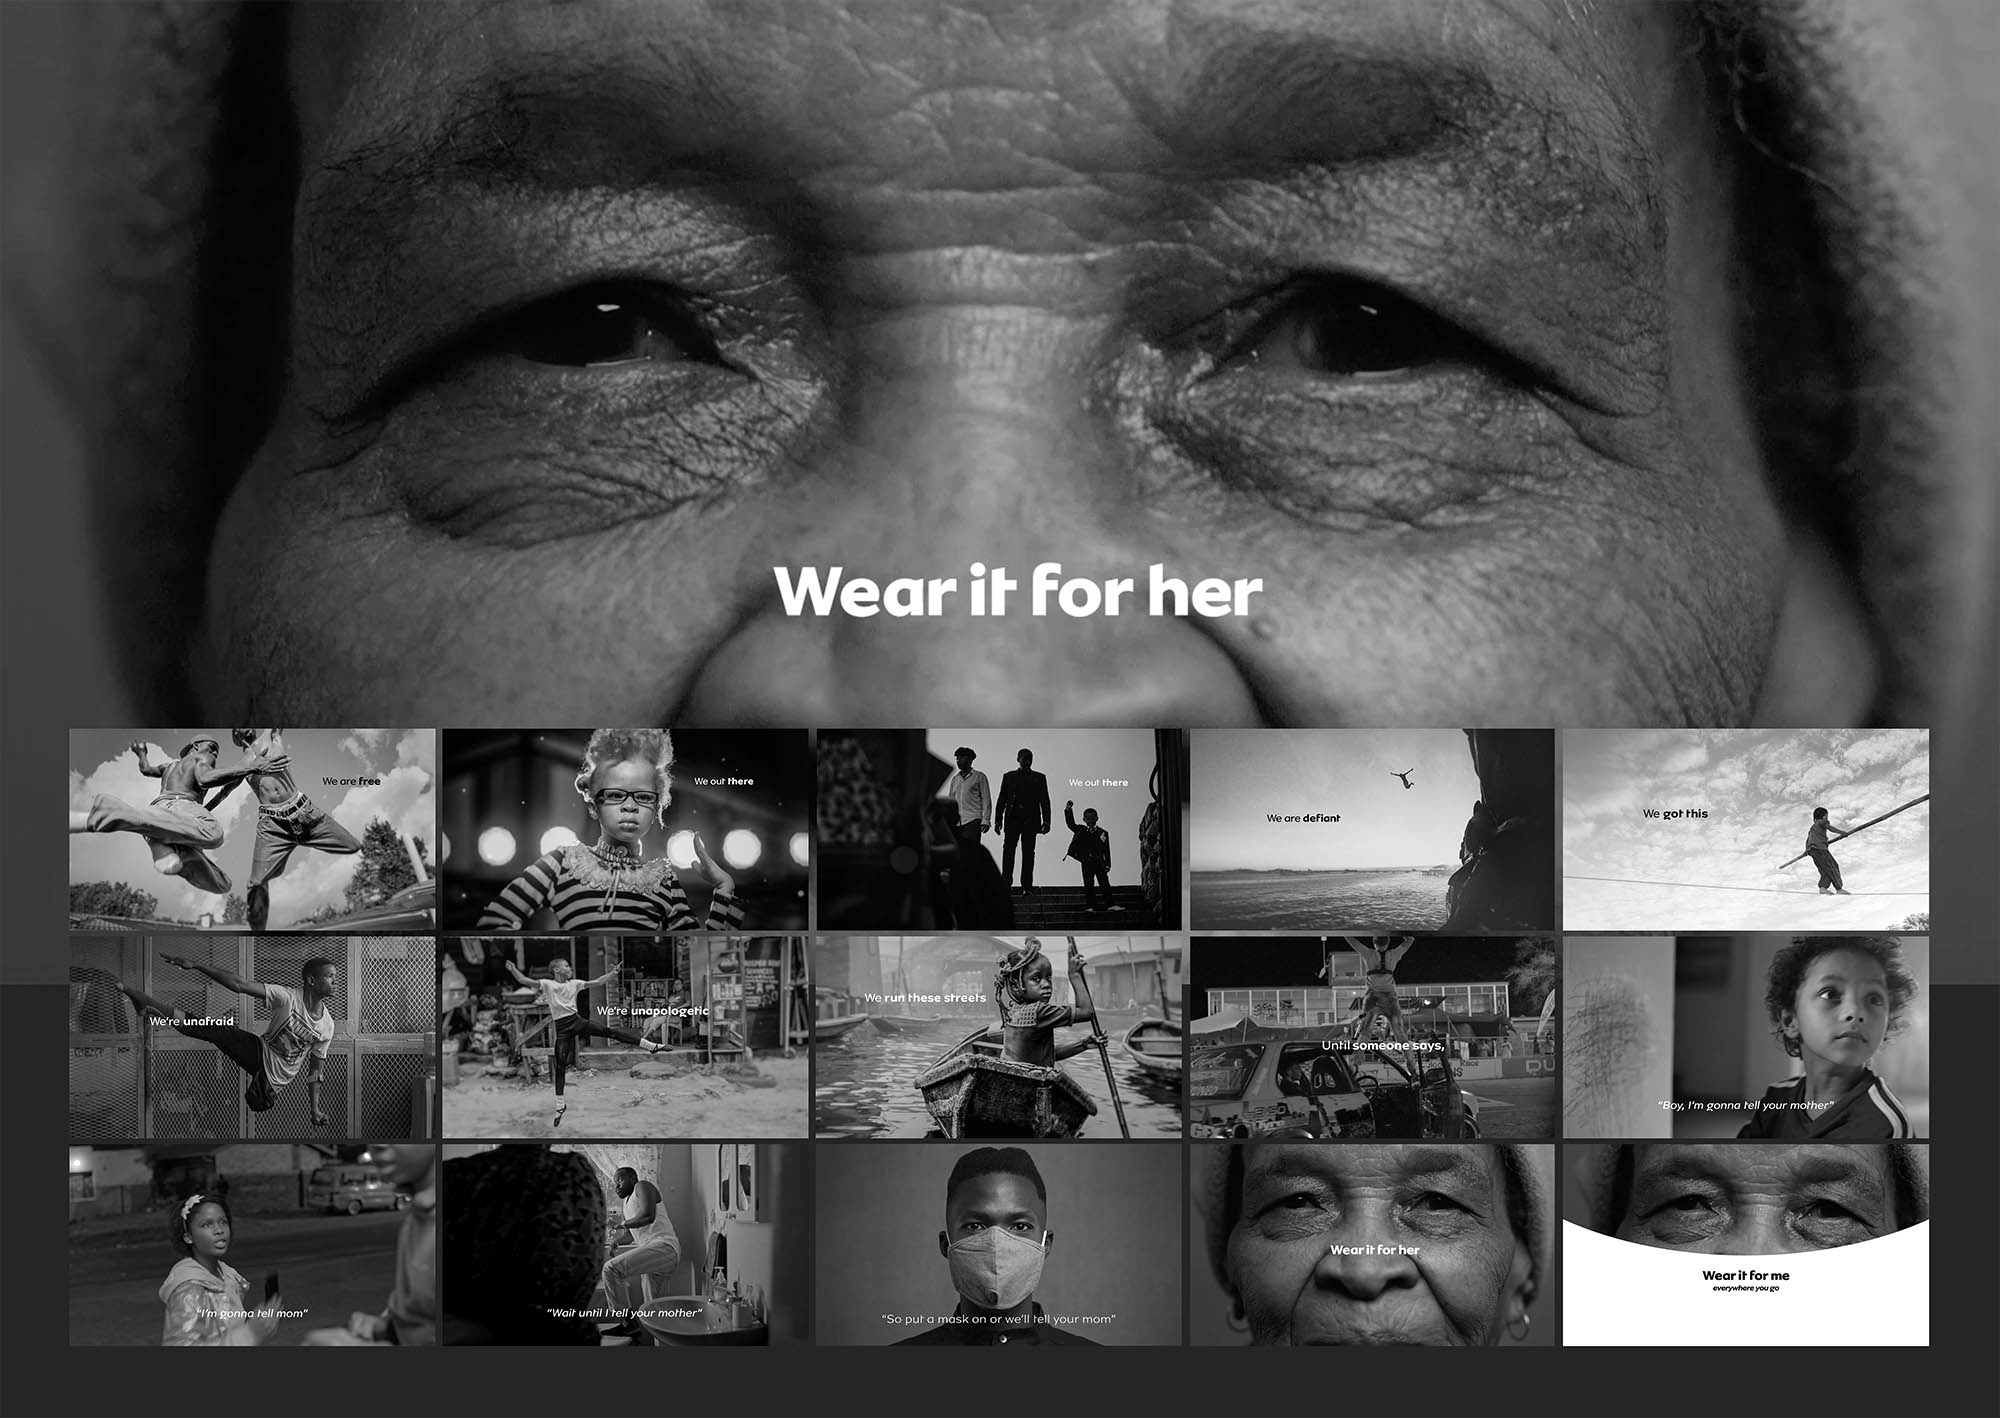 MTN ‘Wear it for me’ Campaign | Digital | Design